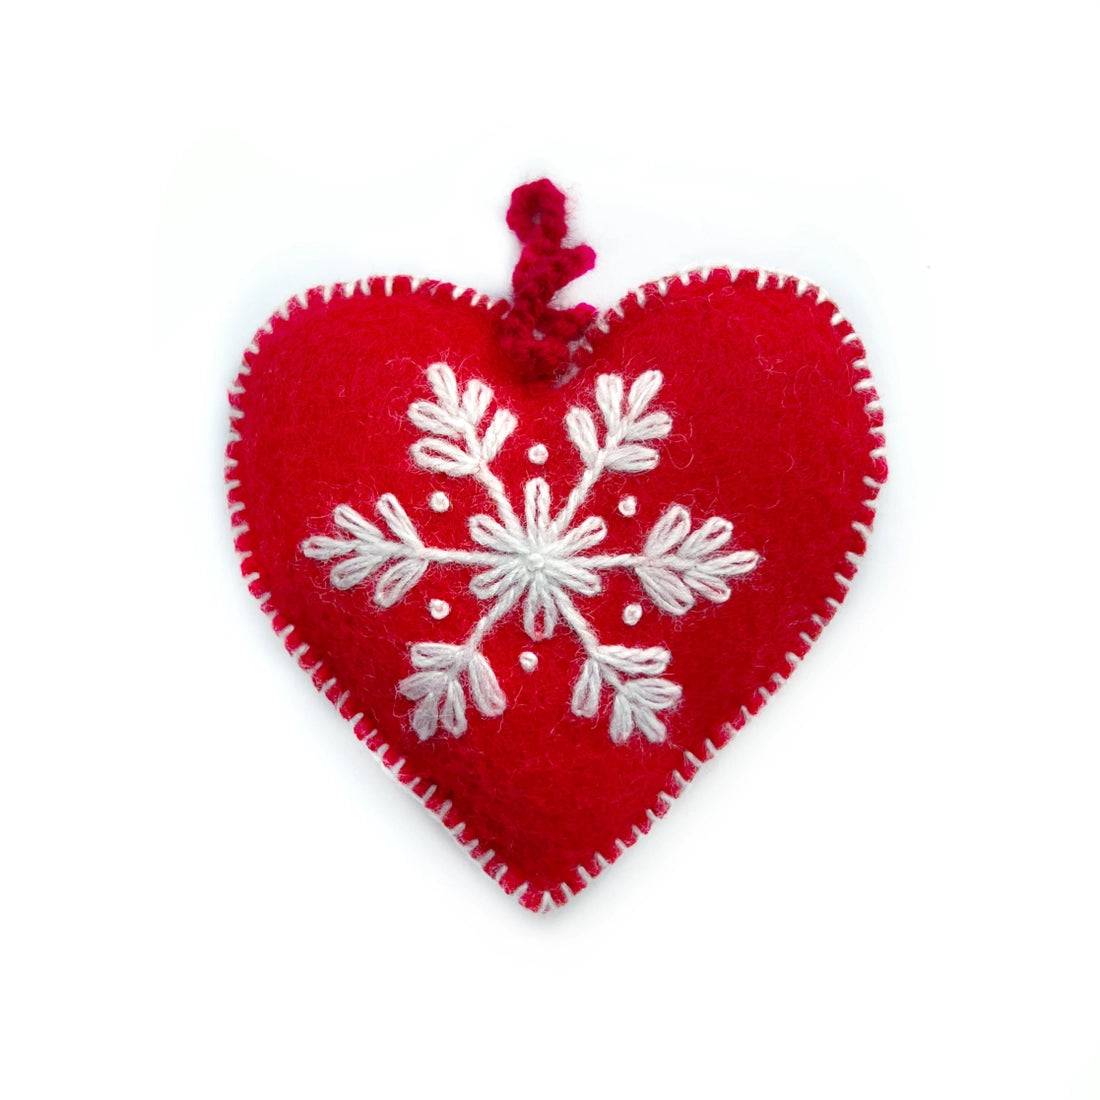 Embroidered Heart Felt Wool Ornament